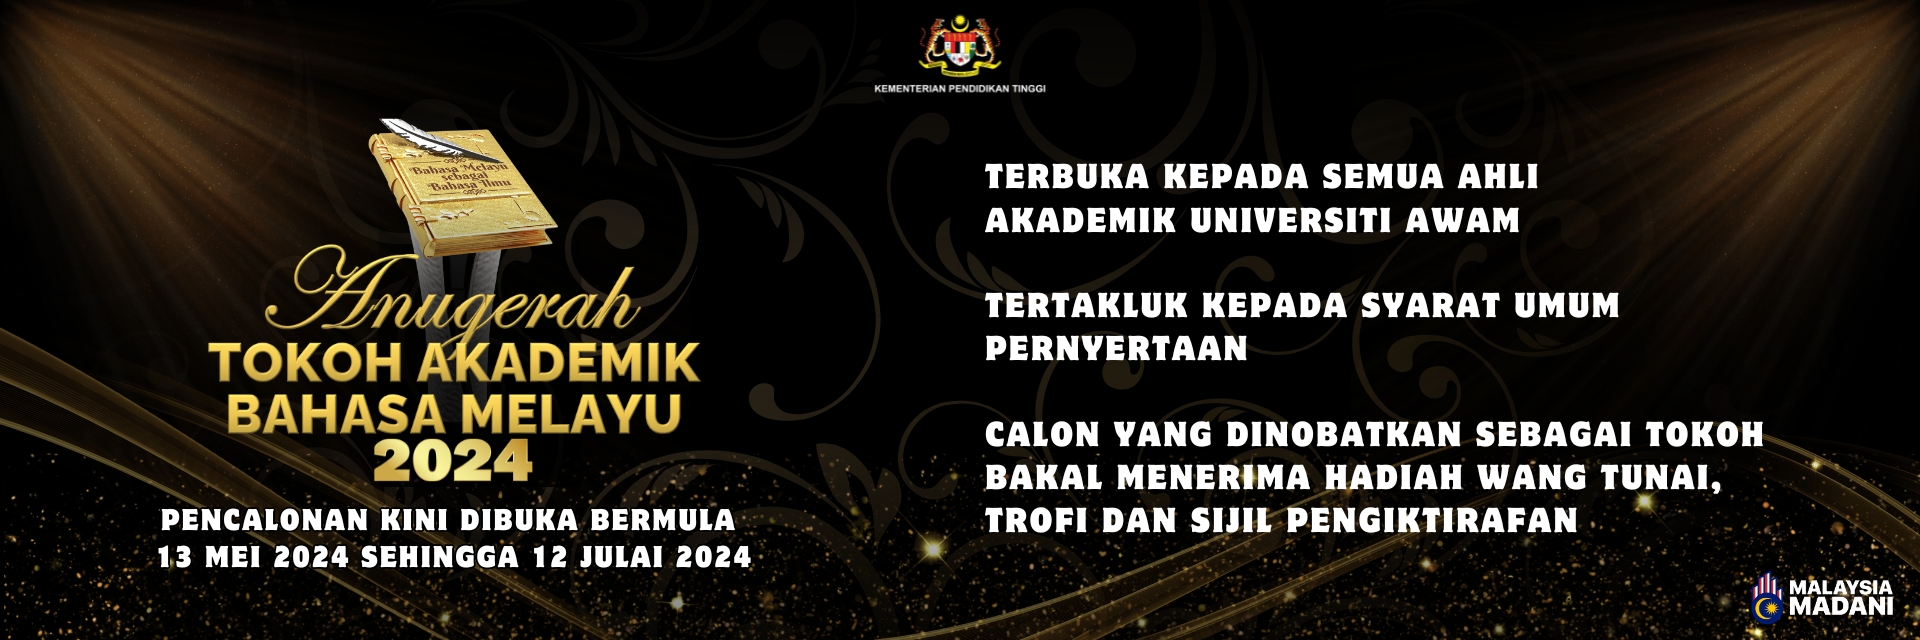 Permohonan Anugerah Tokoh Akademik Bahasa Melayu (ATABM)